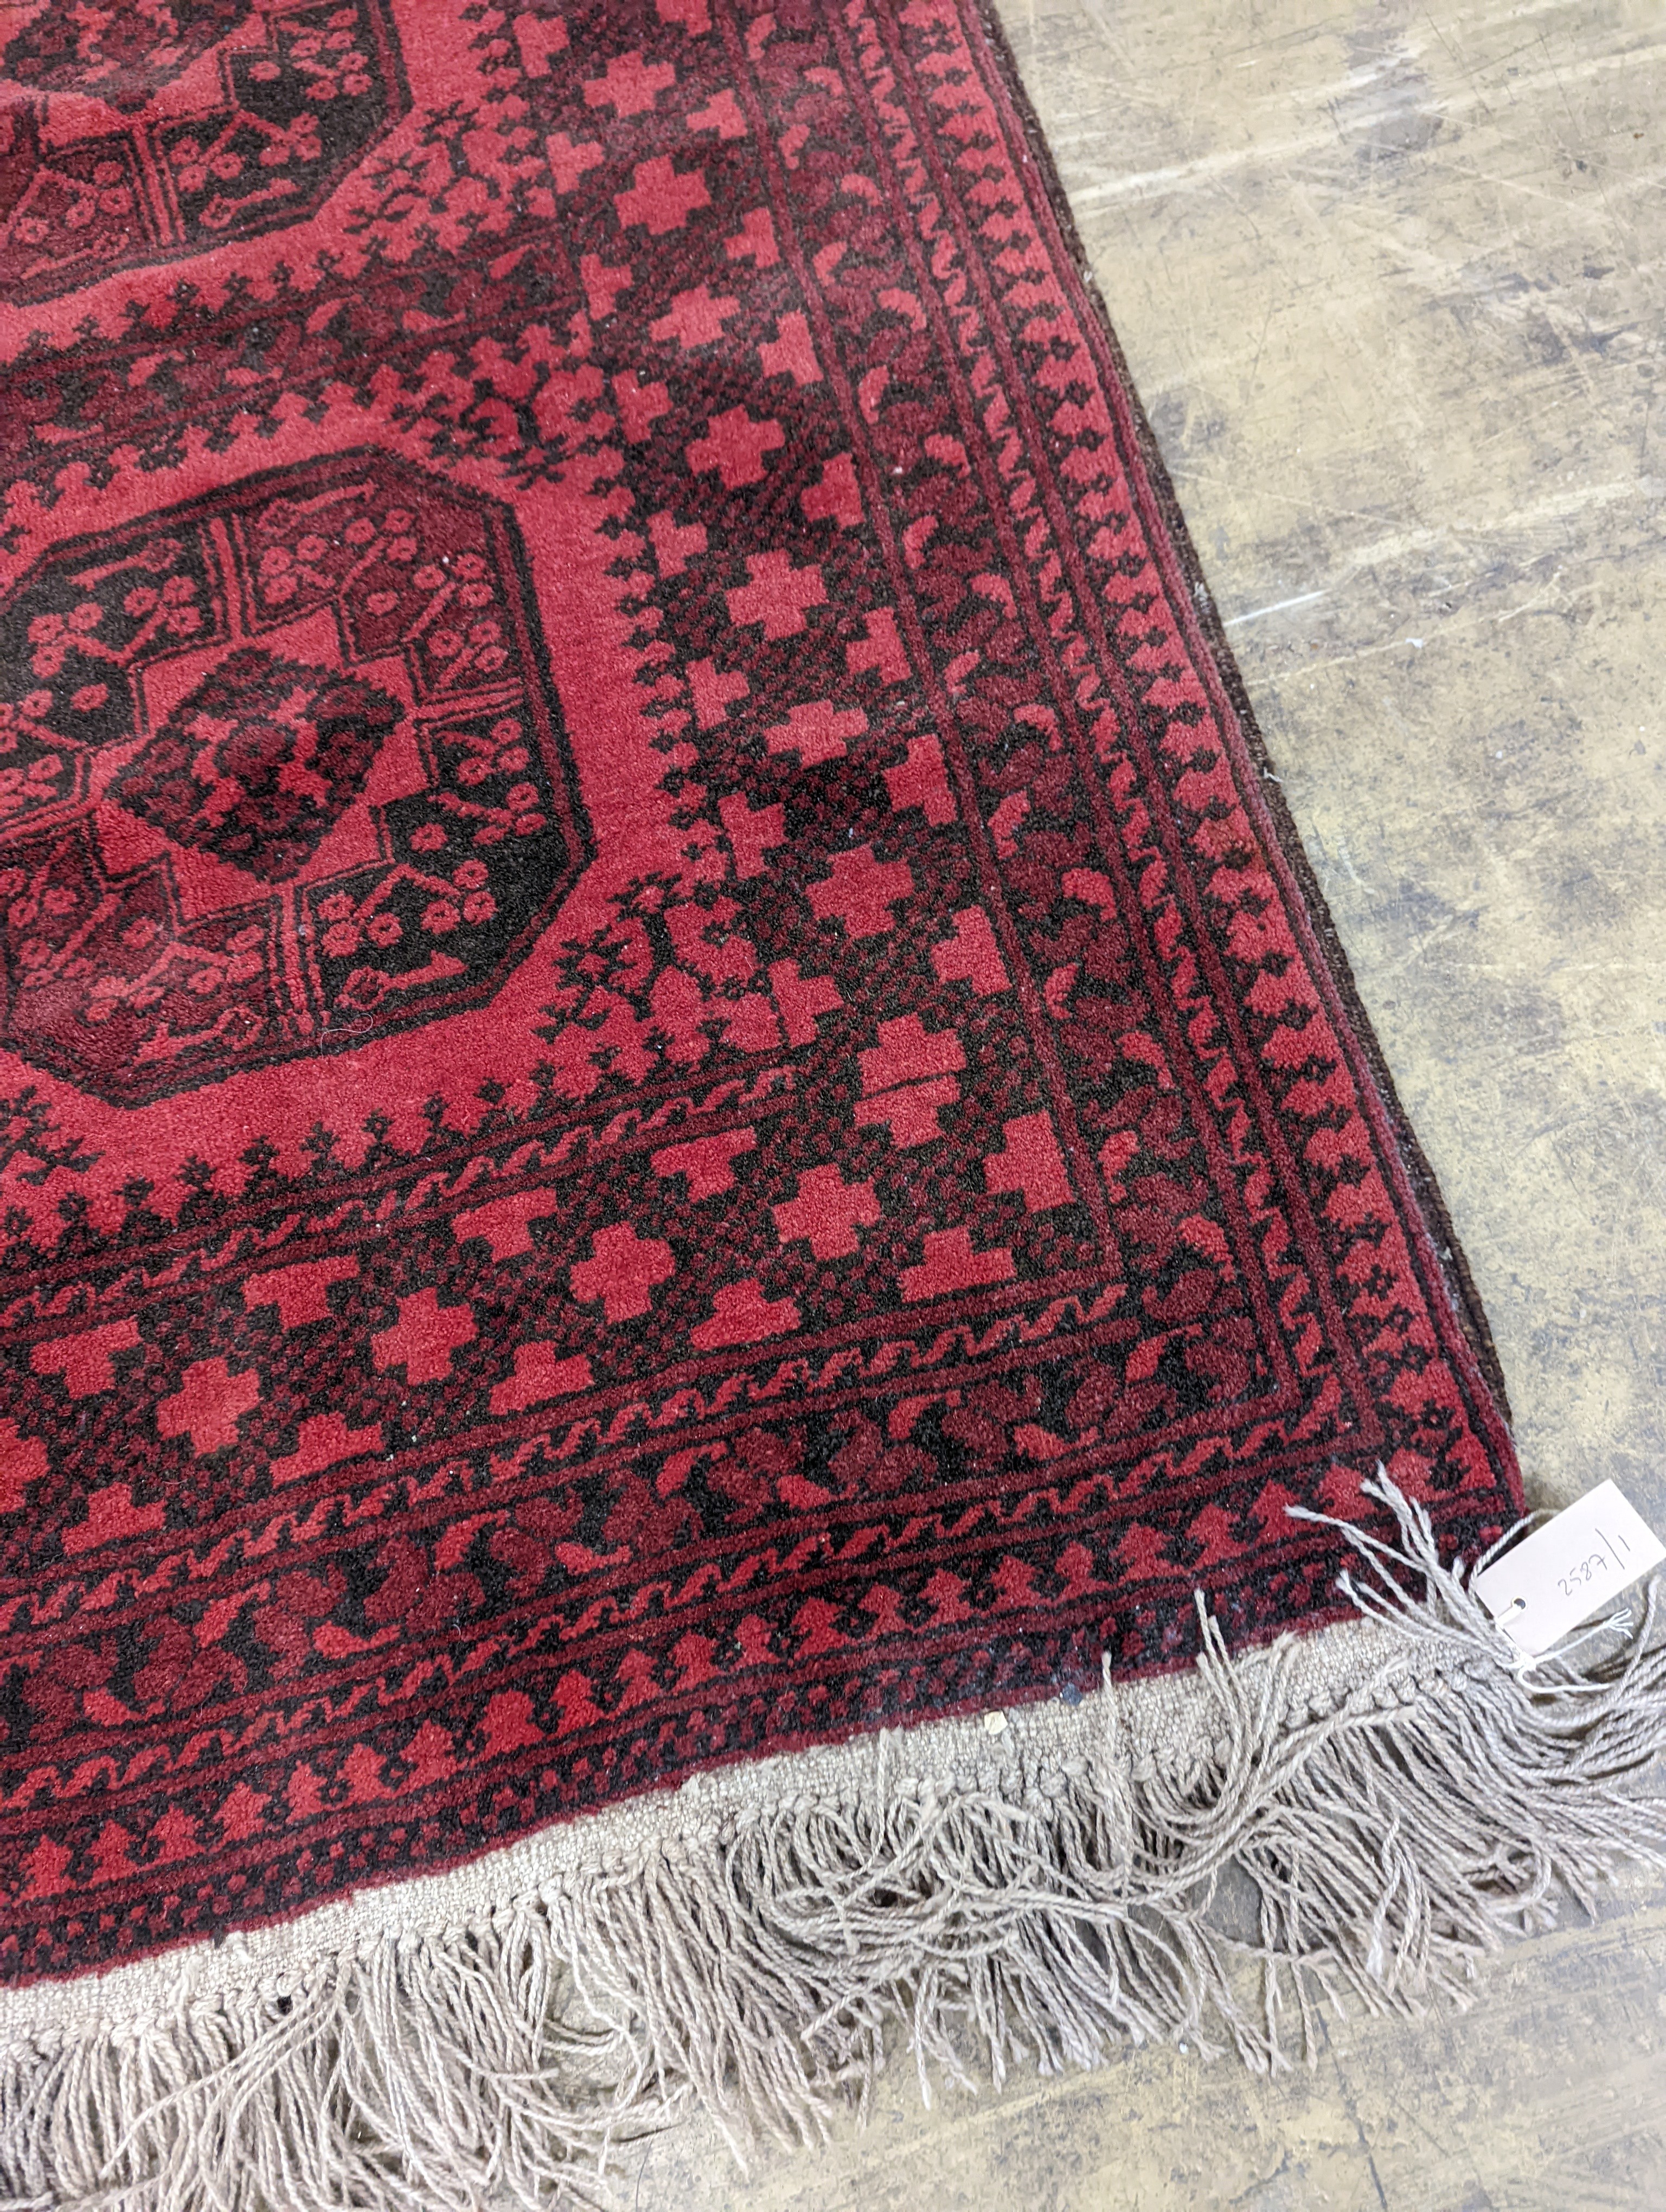 An Afghan red ground rug, 140 x 96cm